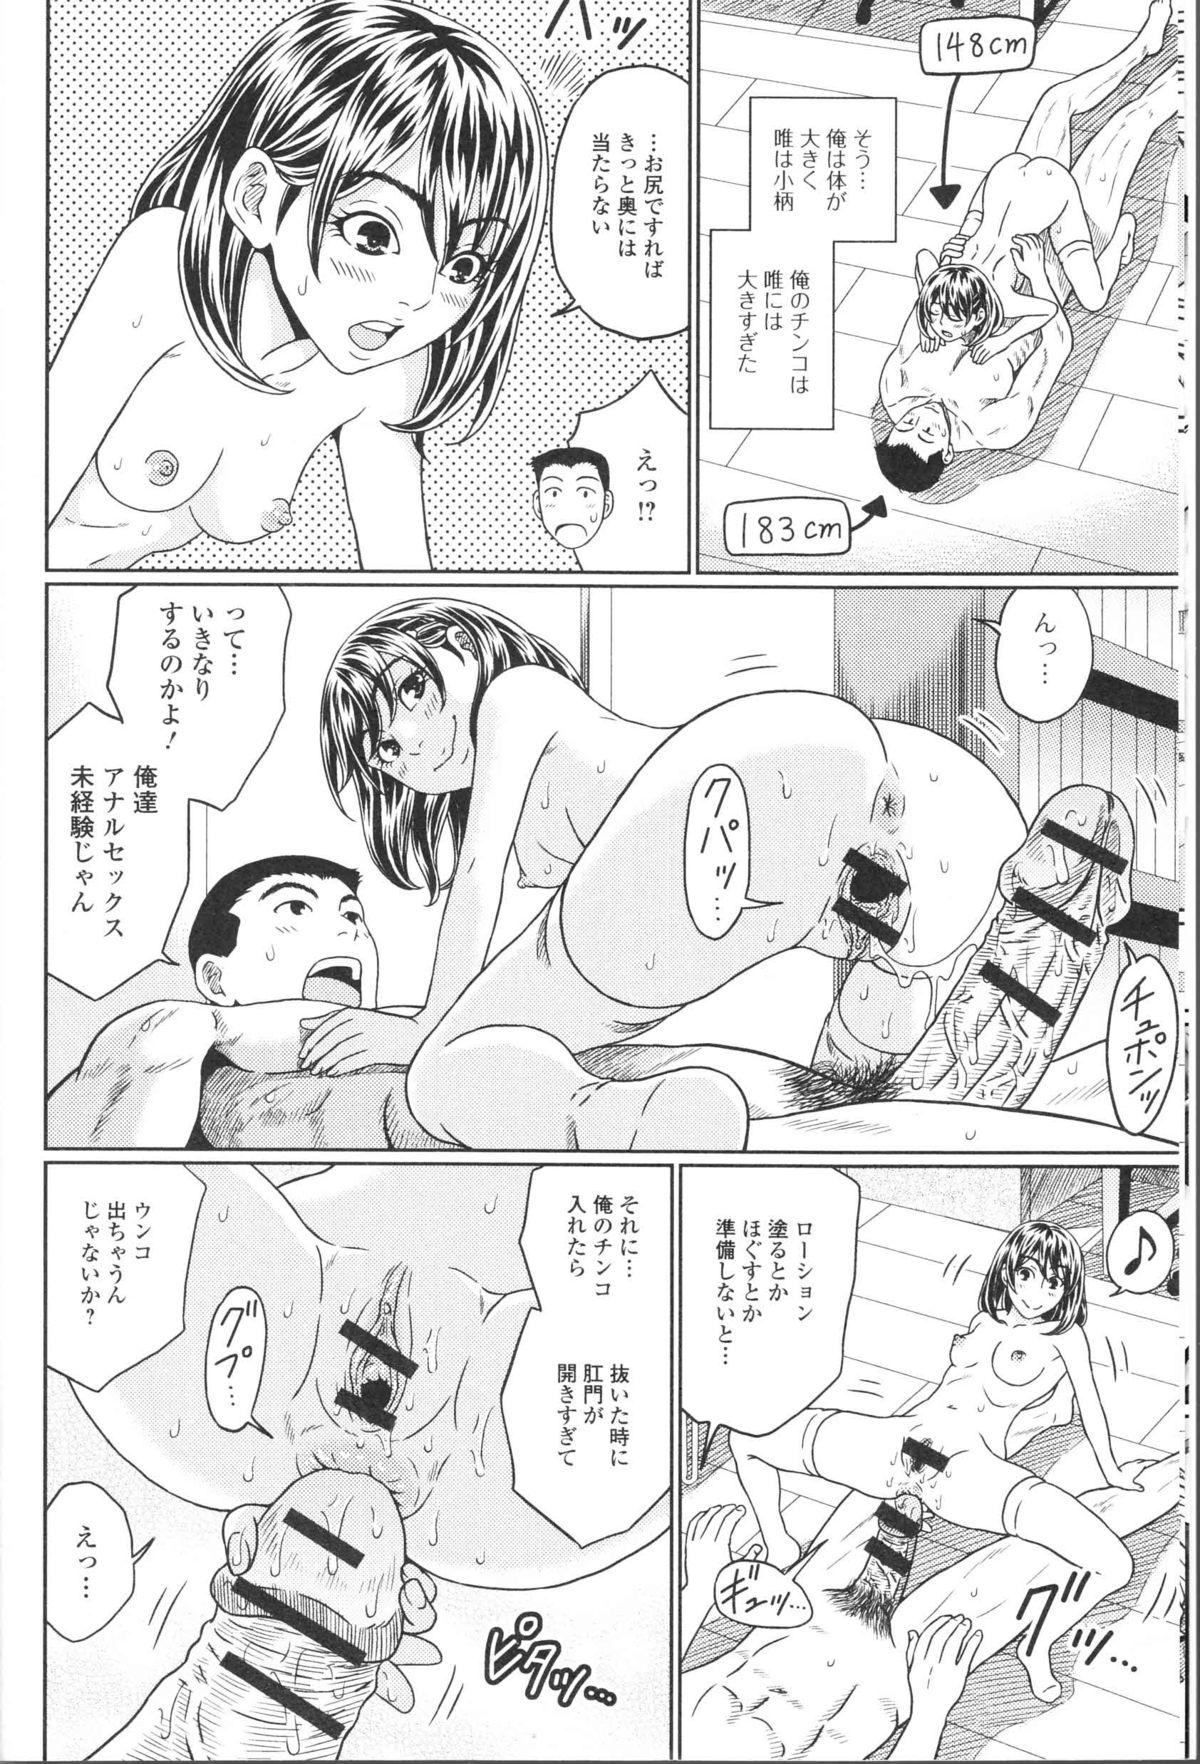 Deepthroat Nozoite wa Ikenai NEO! II - Do Not Peep NEO! II Friend - Page 8